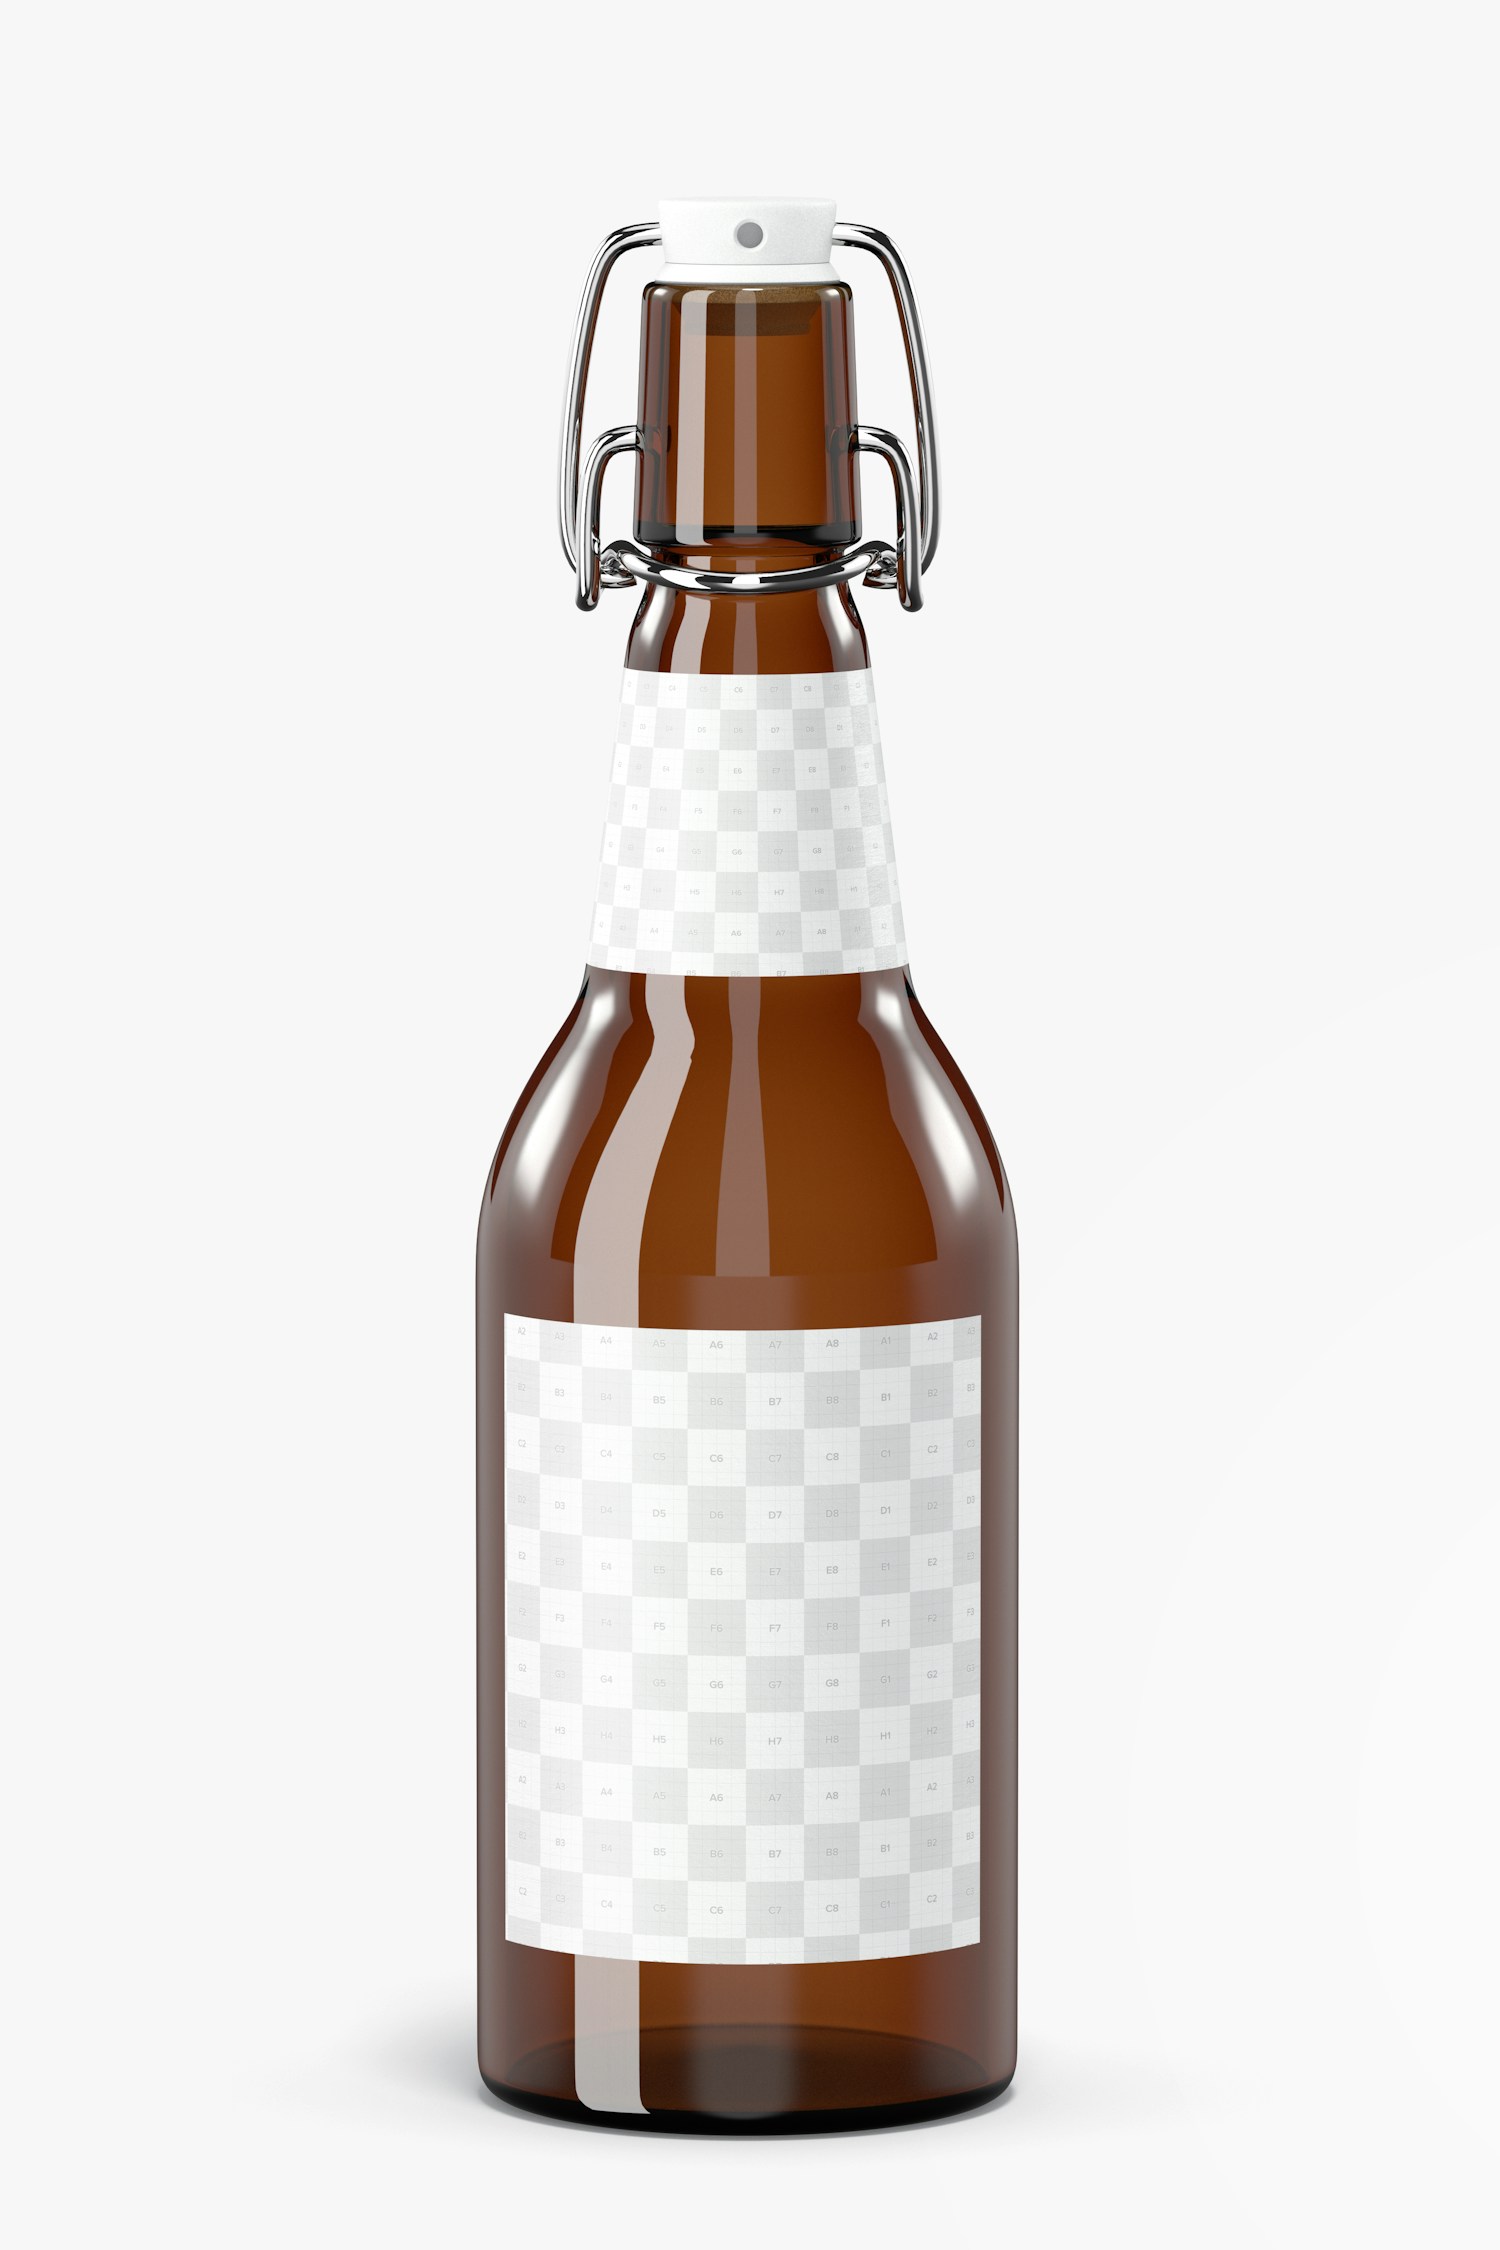 Maqueta de Botella de Cerveza Artesanal